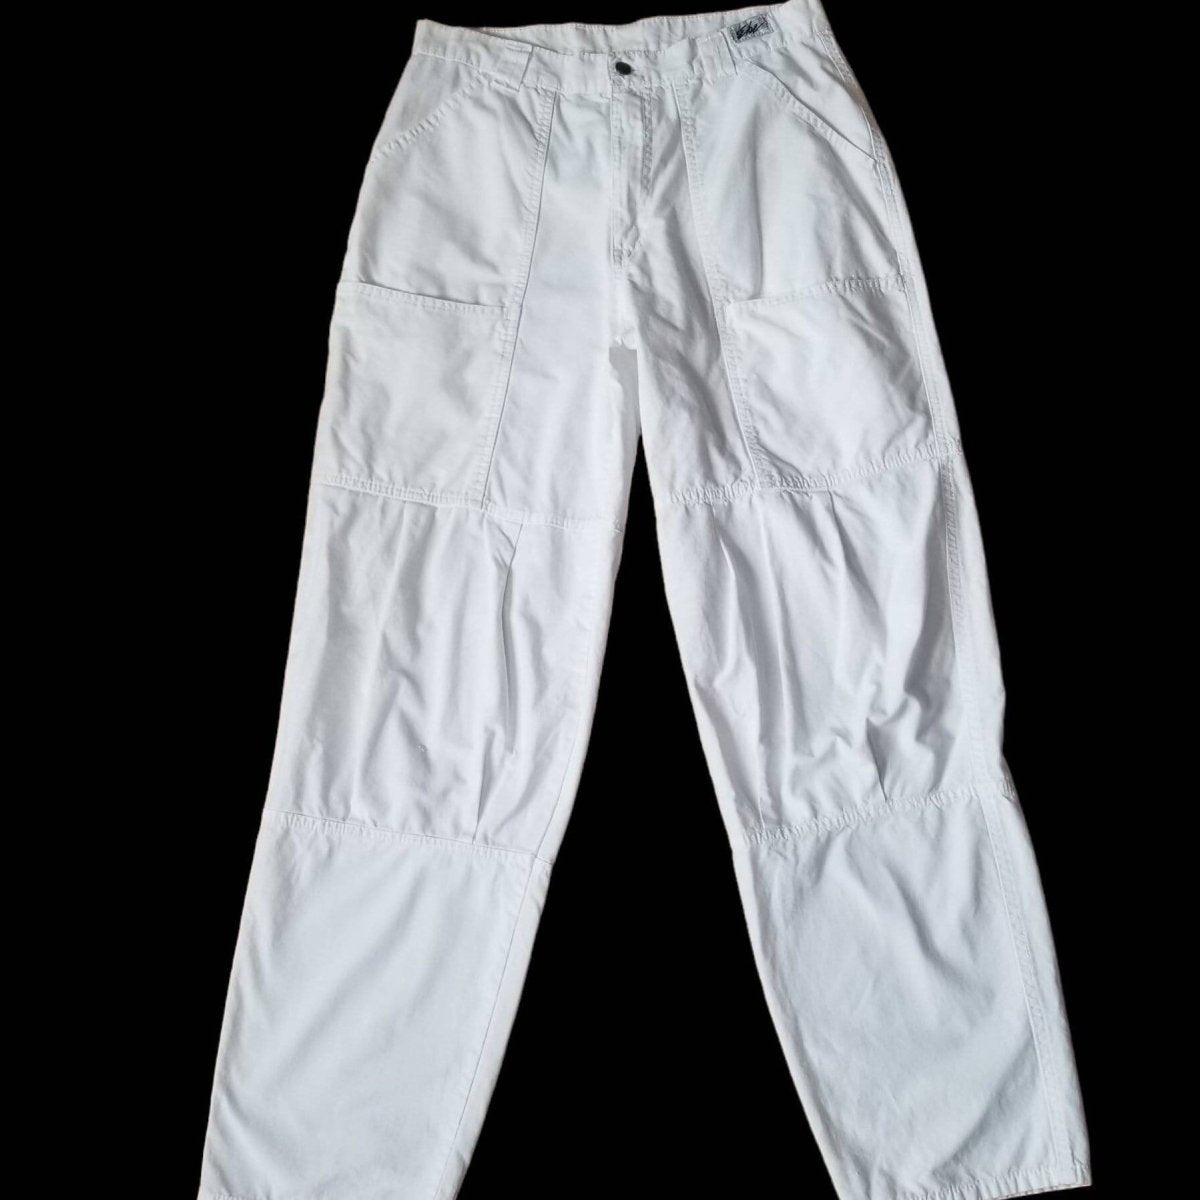 RARE 80s White Cargo Pants Men 31X30 - themallvintage The Mall Vintage 1980s Menswear Pants